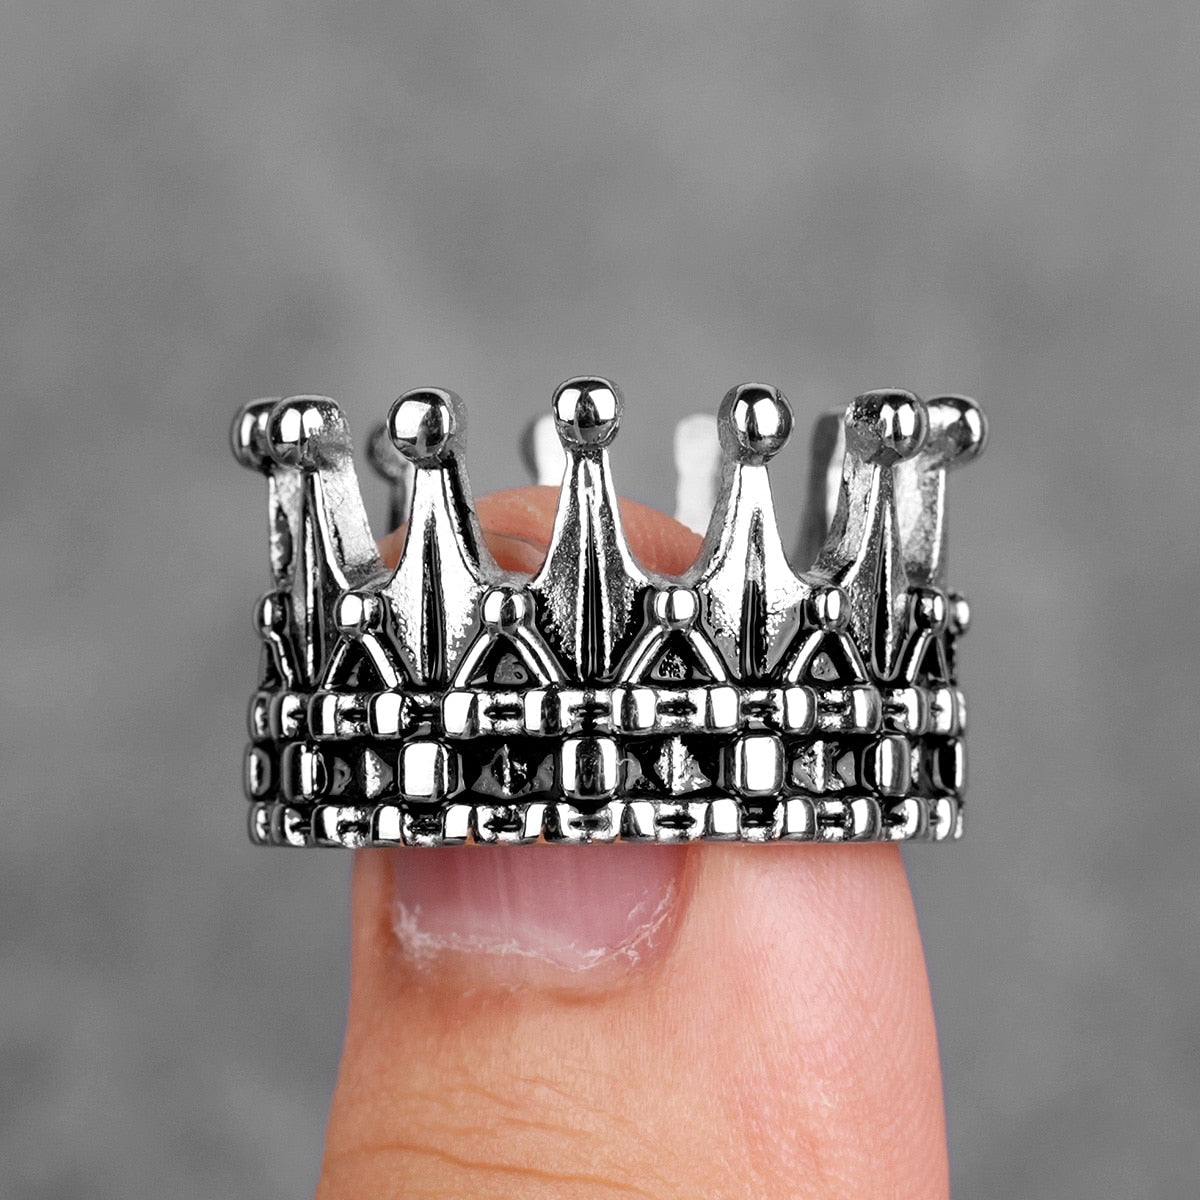 Stainless Steel Men Rings Crown King Queen Punk Rock Hip Hop Vintage for Biker Male Boyfriend Jewelry Creativity Gift